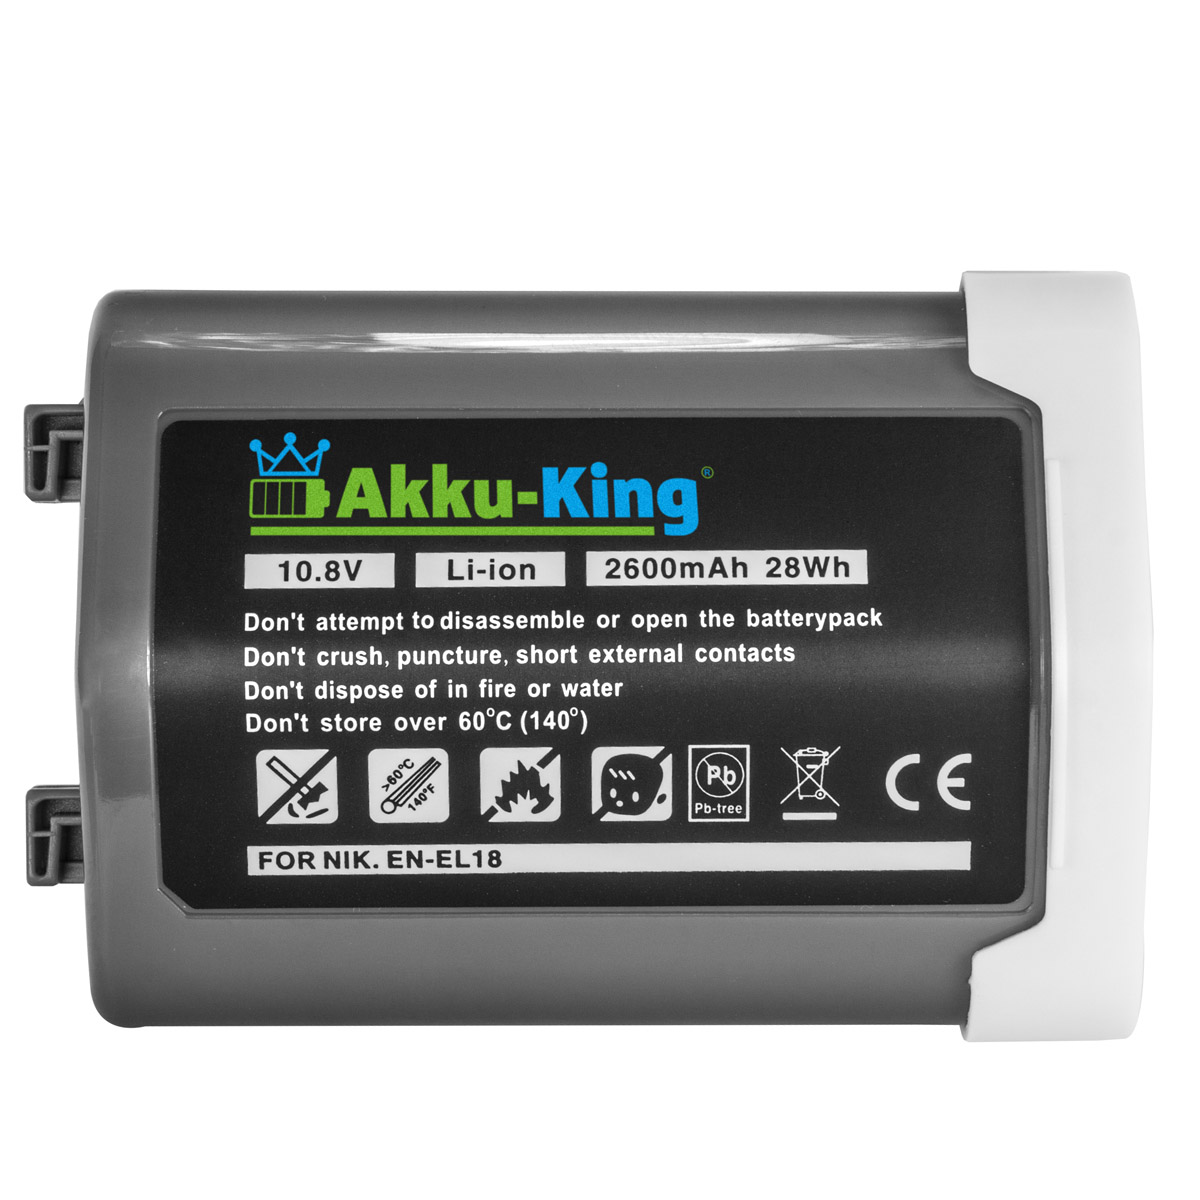 AKKU-KING Akku kompatibel mit 10.8 Nikon Kamera-Akku, 2600mAh Li-Ion Volt, EN-EL18